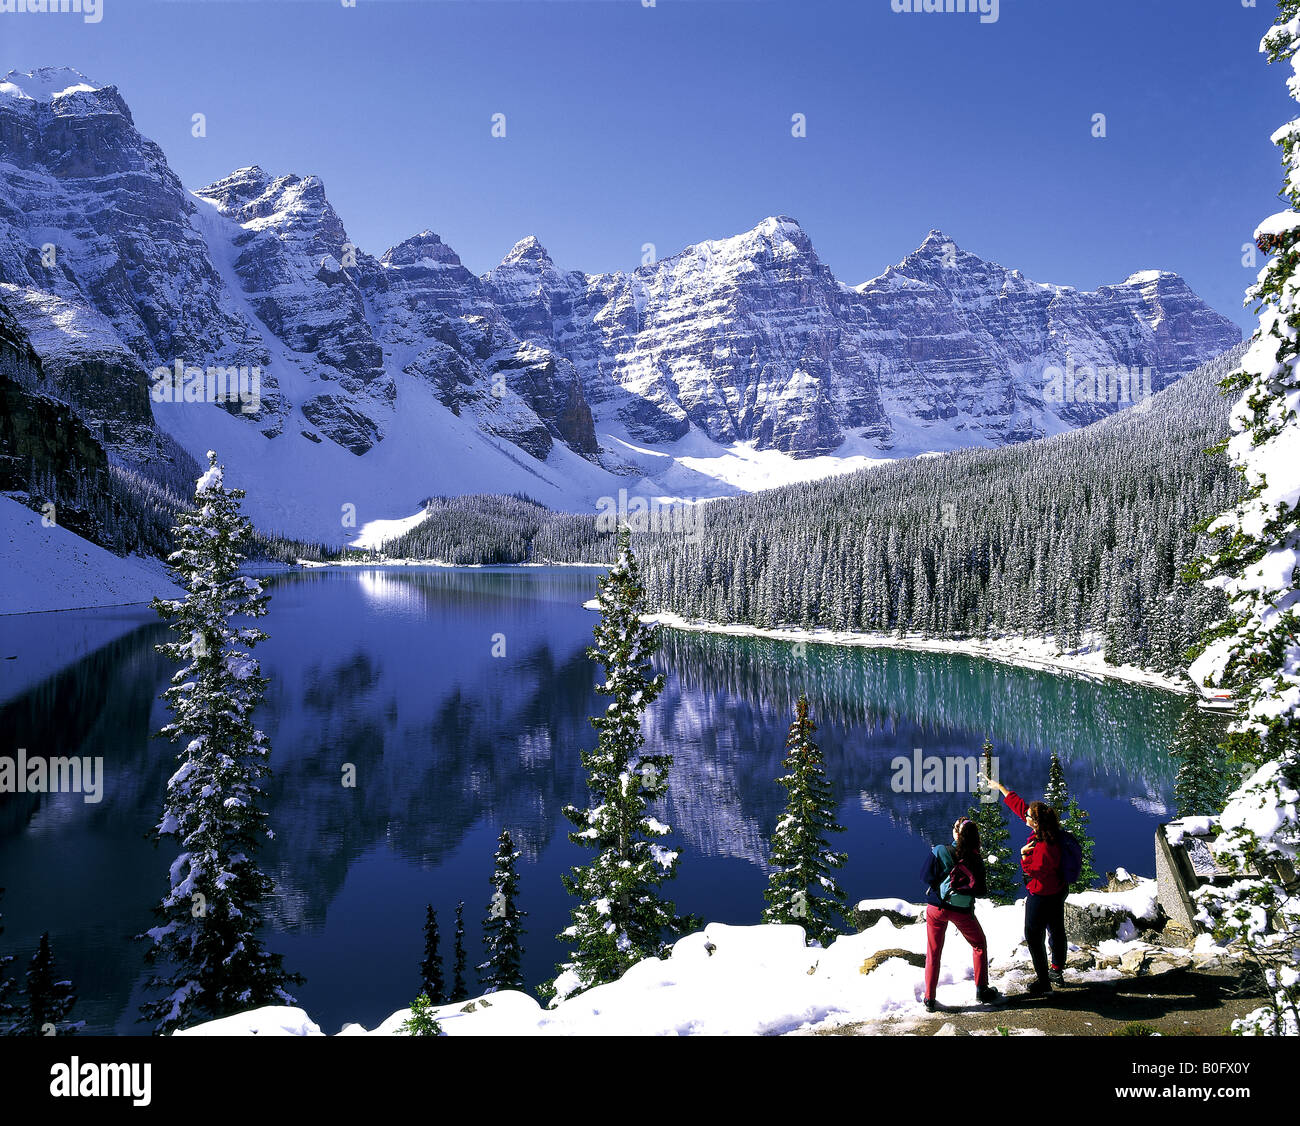 Moraine Lake im Schnee Banff National Park Kanada Stockfoto